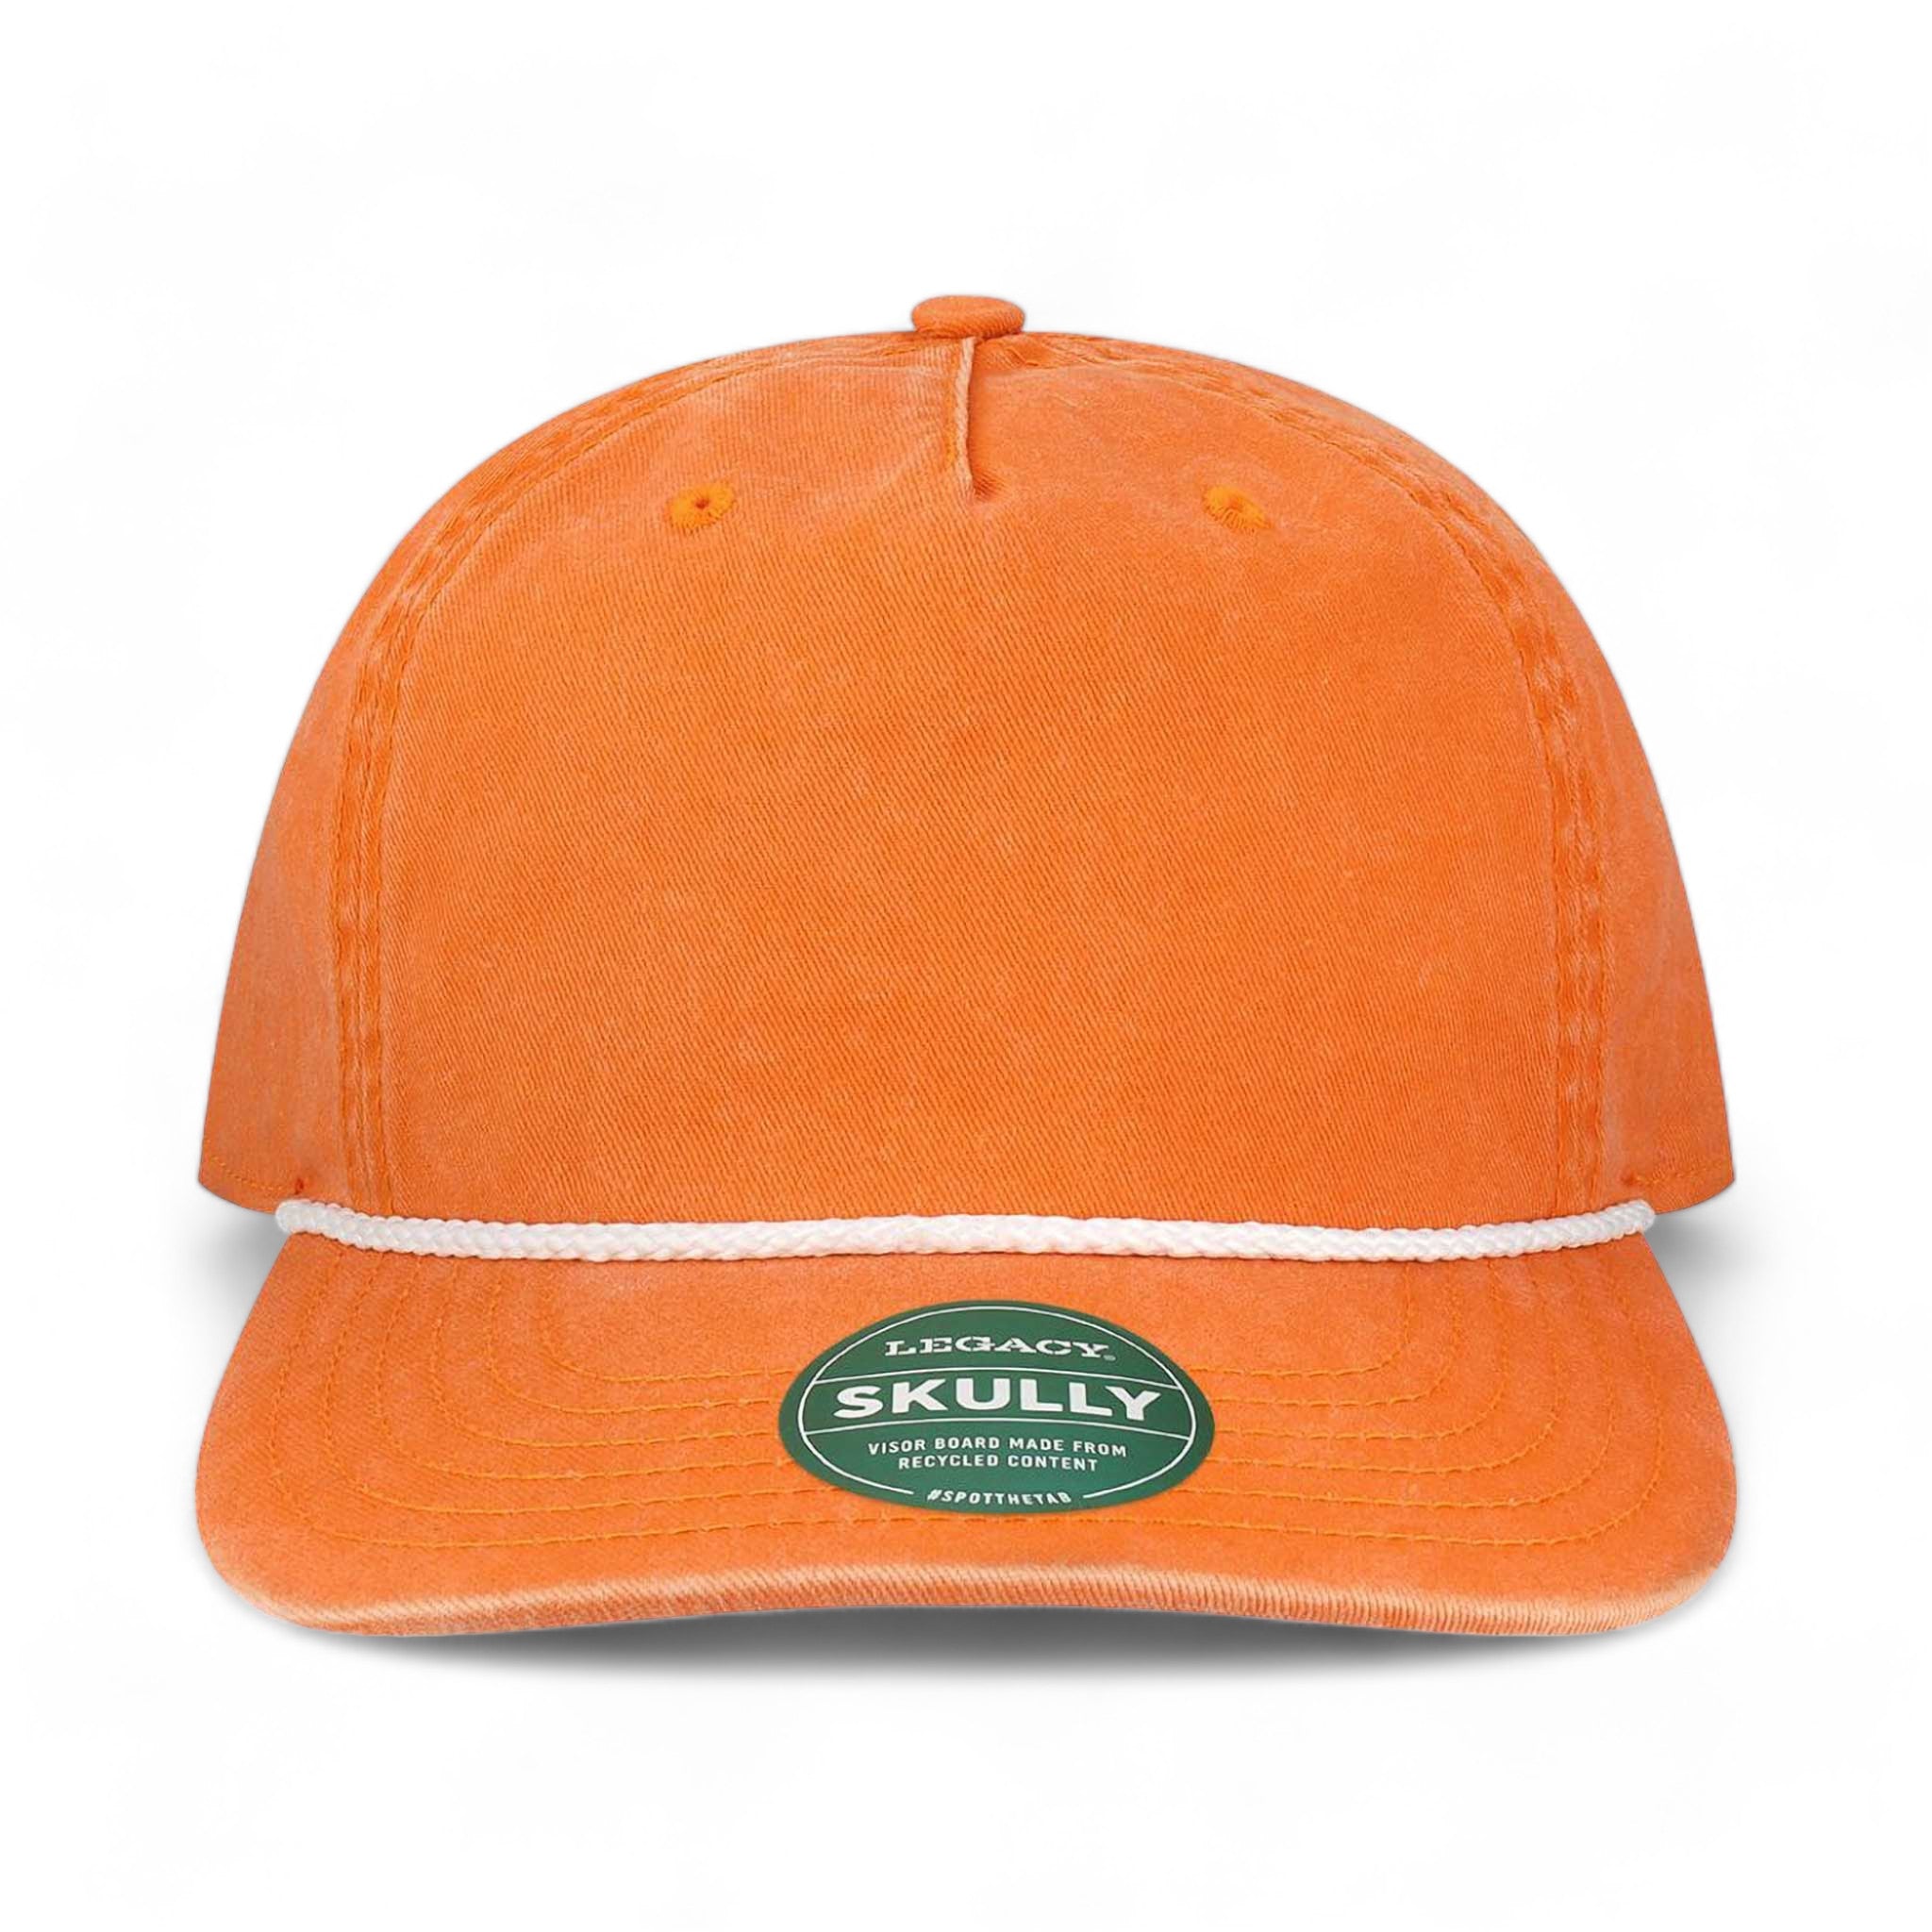 Front view of LEGACY SKULLY custom hat in tangerine orange